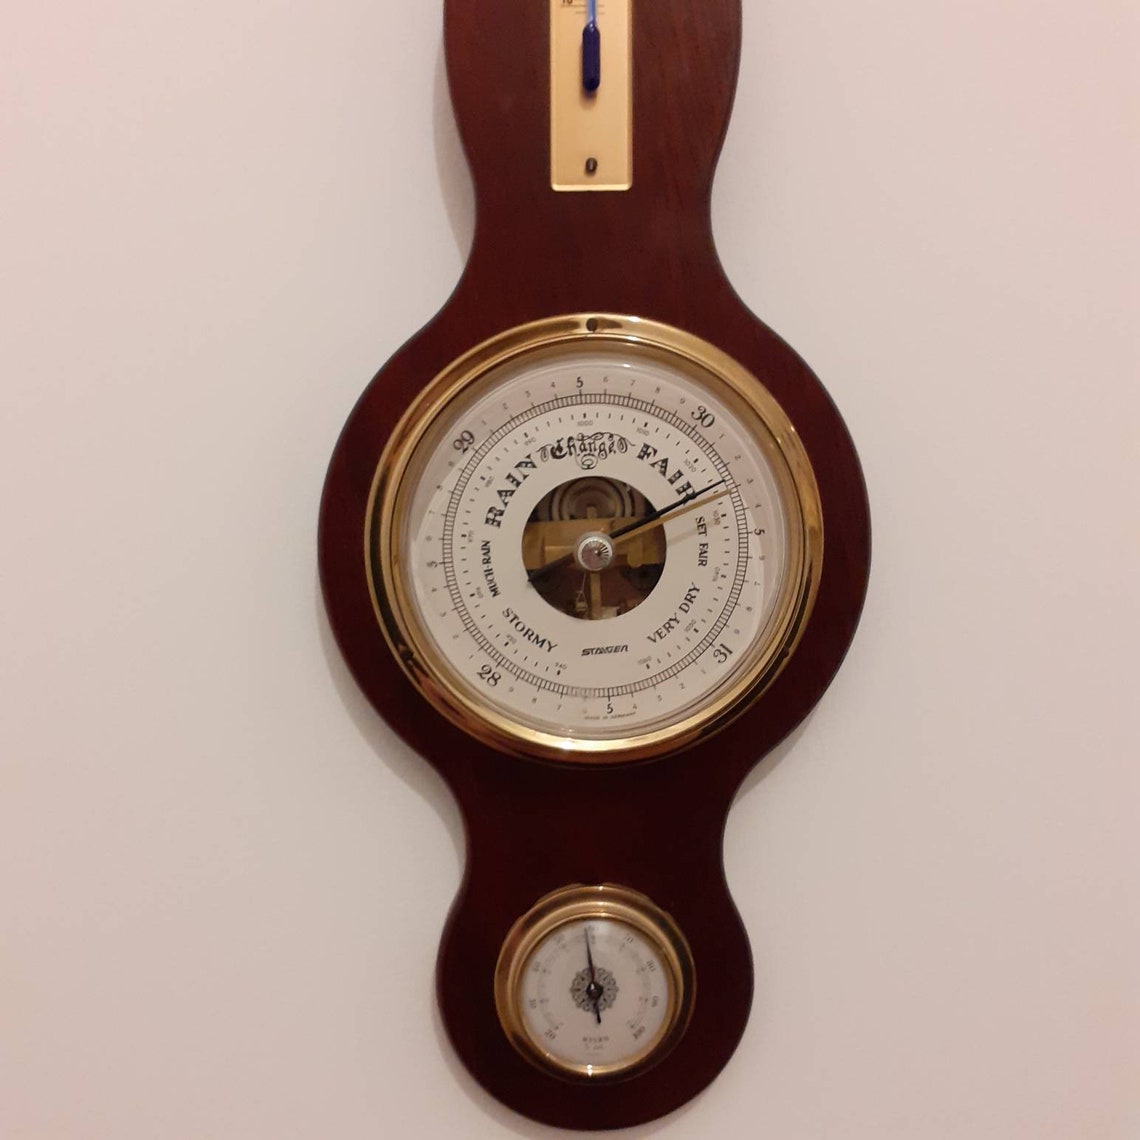 Staiger German Barometer. Vintage wooden nautical barometer - Il 1140xN.2726437702 Aeue